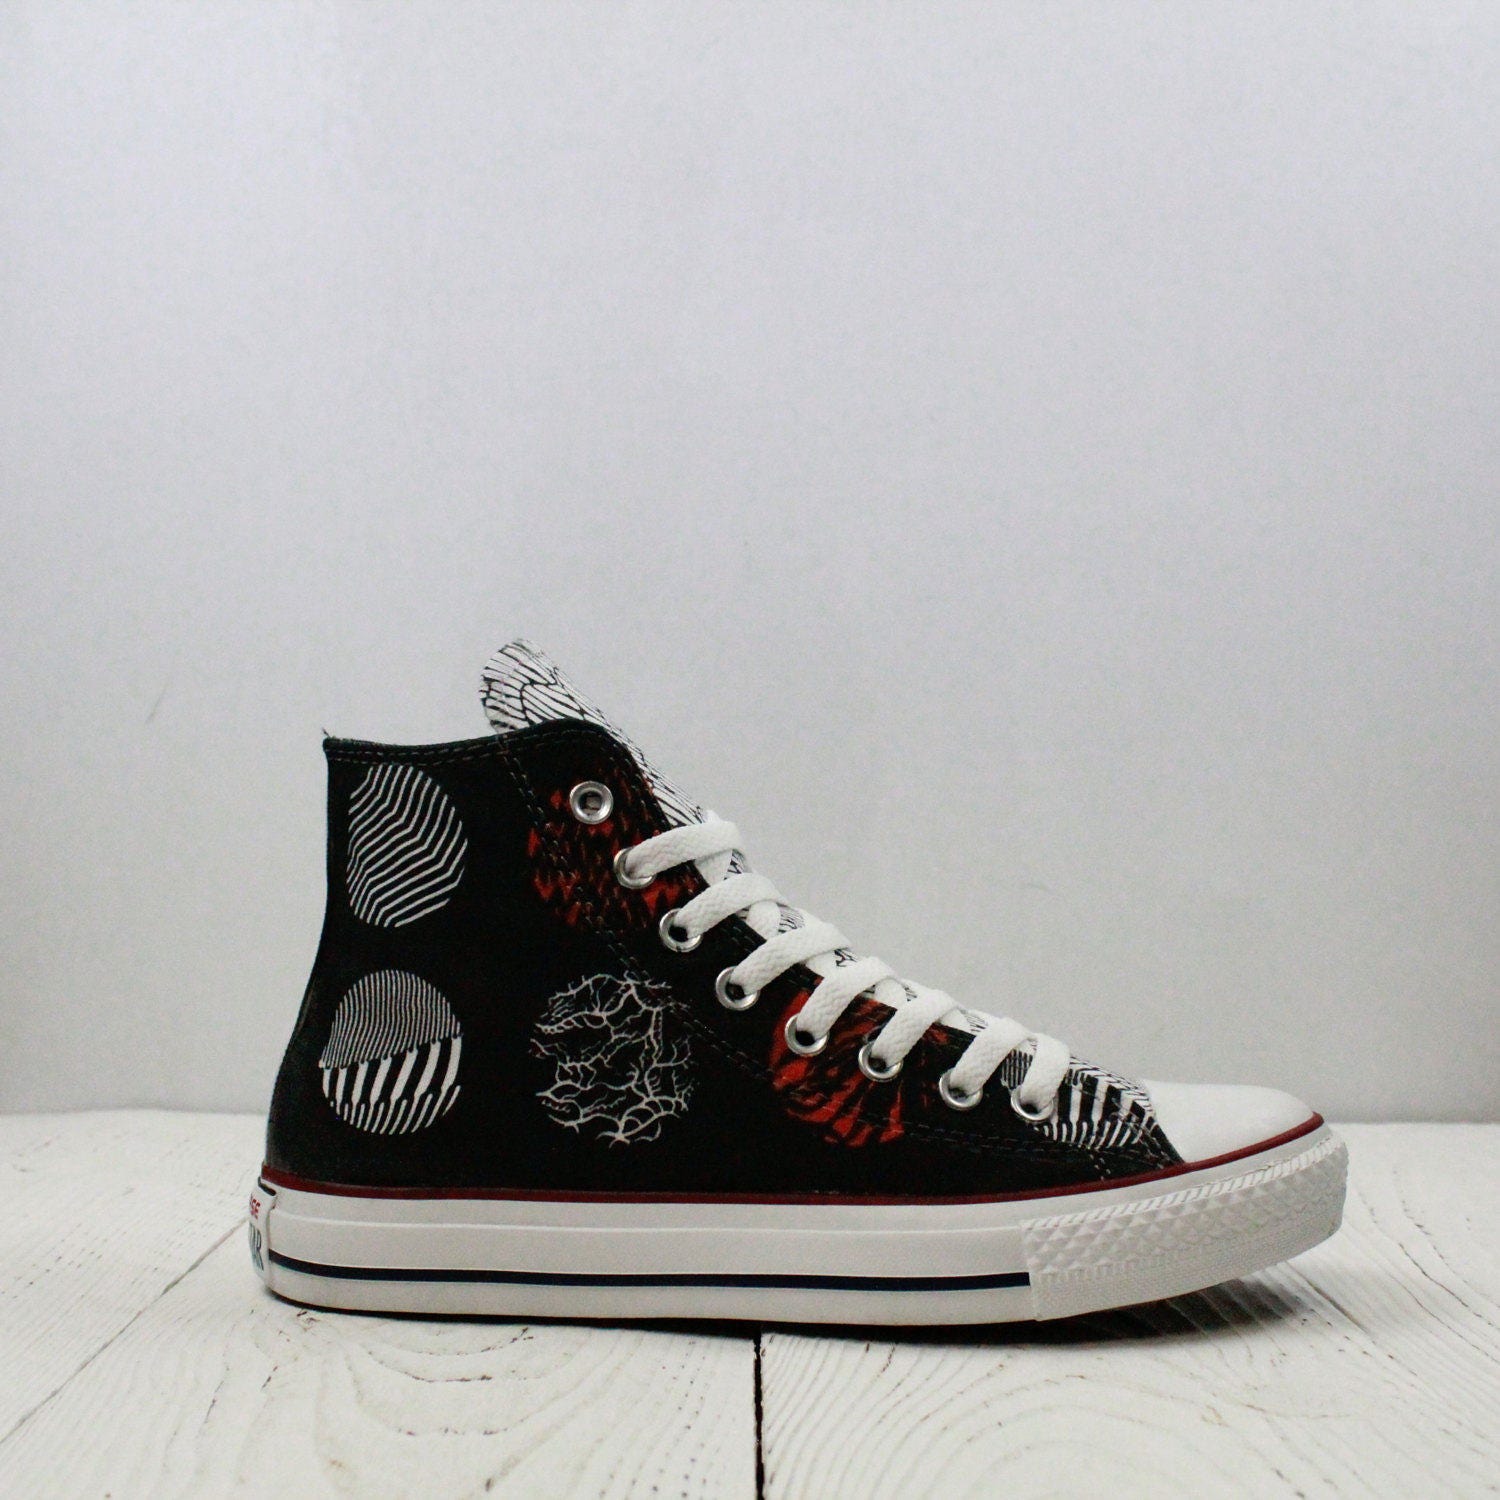 Twenty One Pilots Blurryface custom converse shoes with